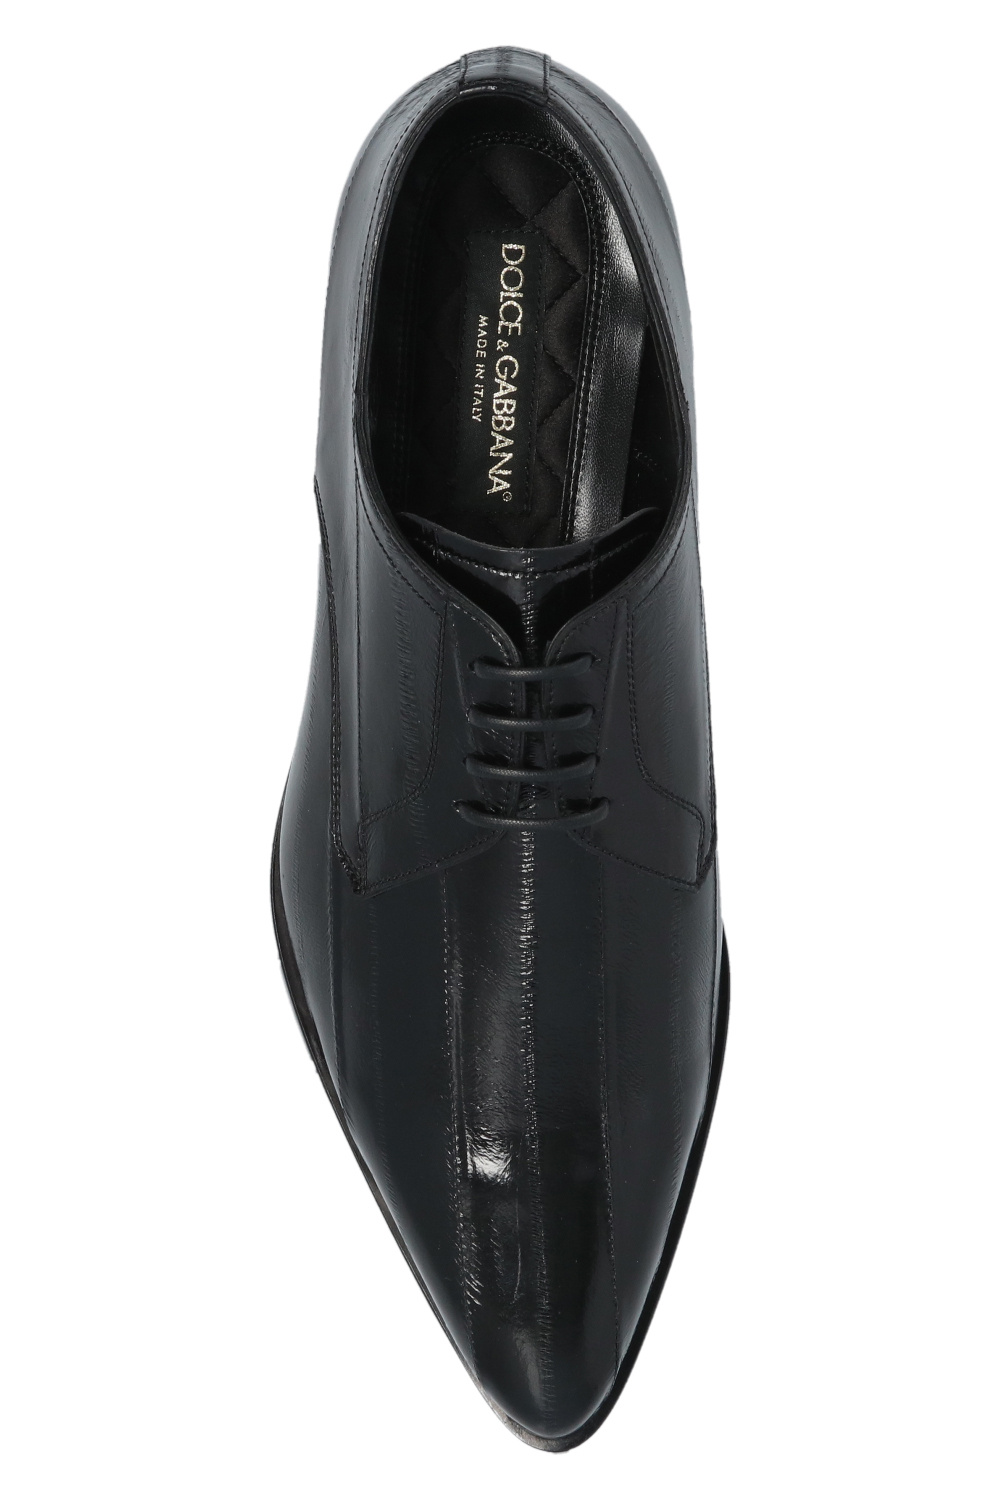 Dolce & Gabbana ‘Copernico’ Derby shoes